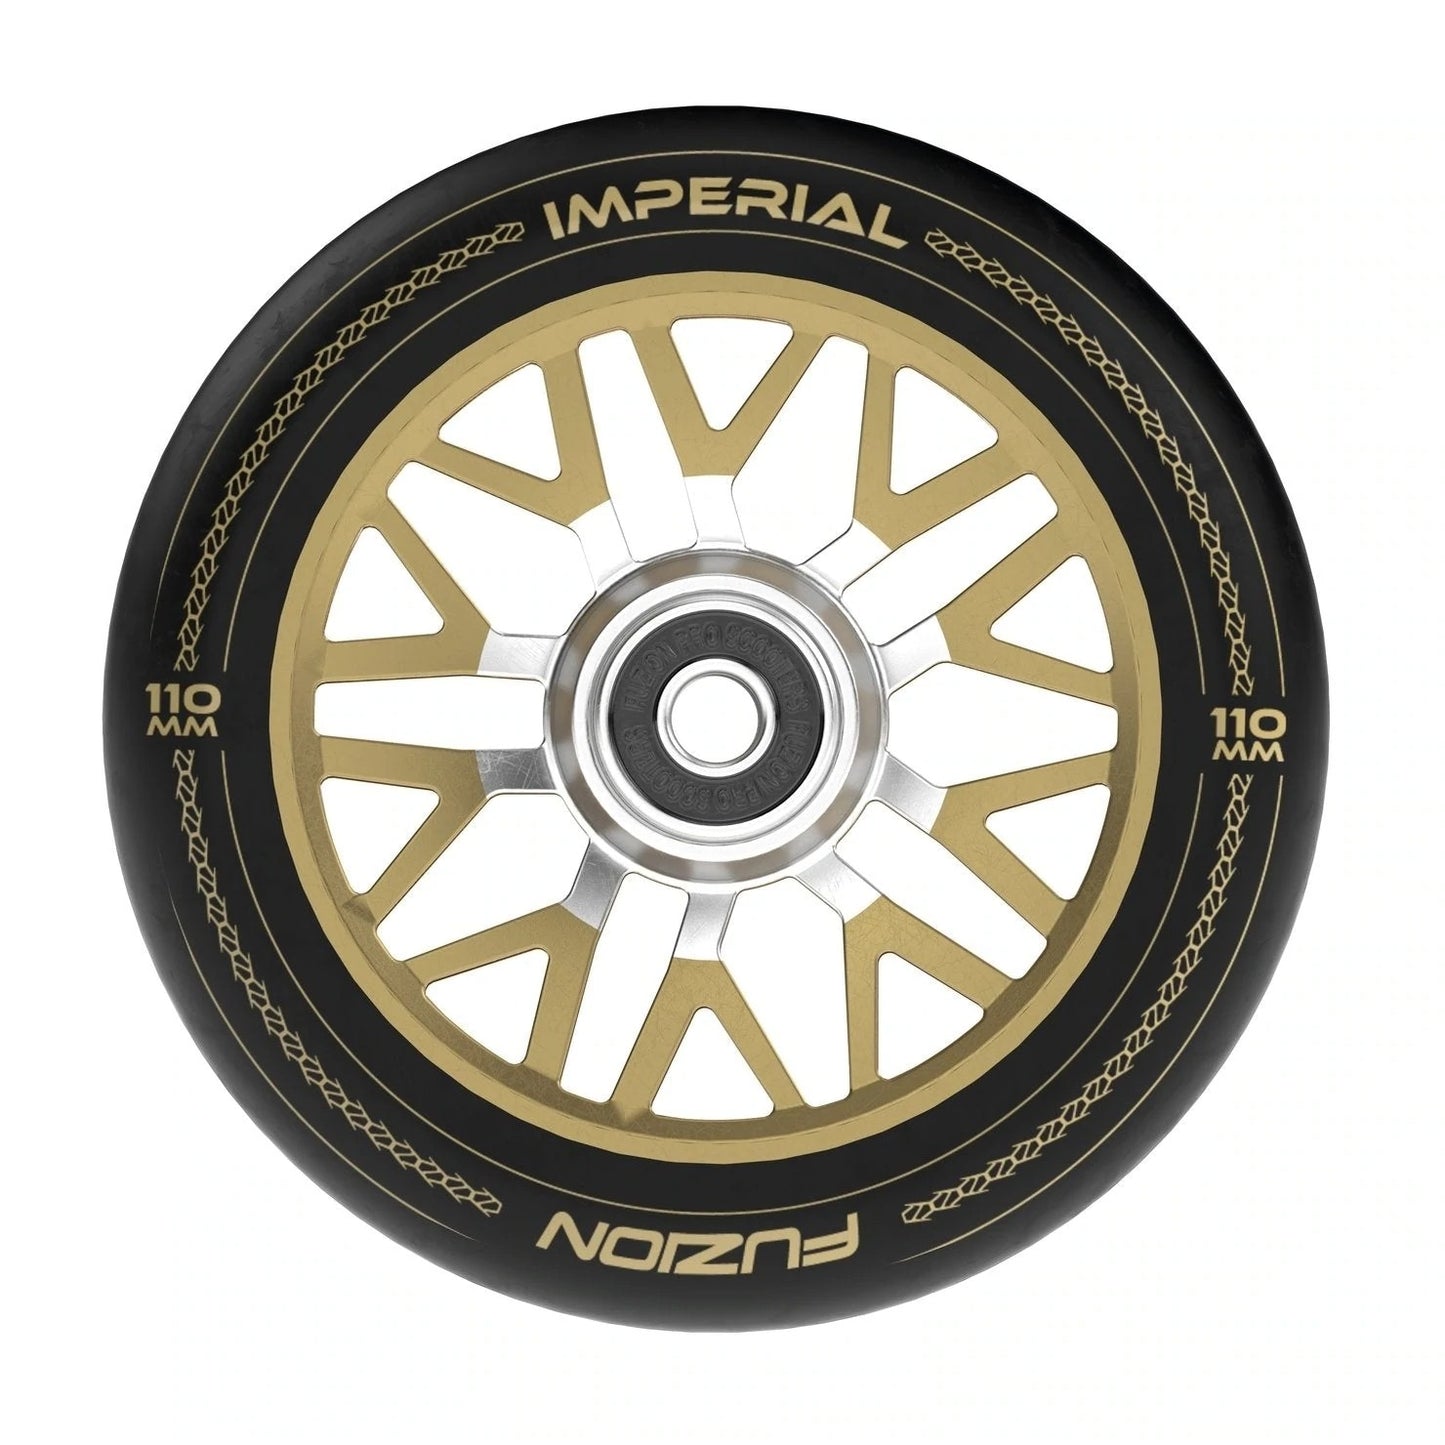 Fuzion Imperial Wheel 2022